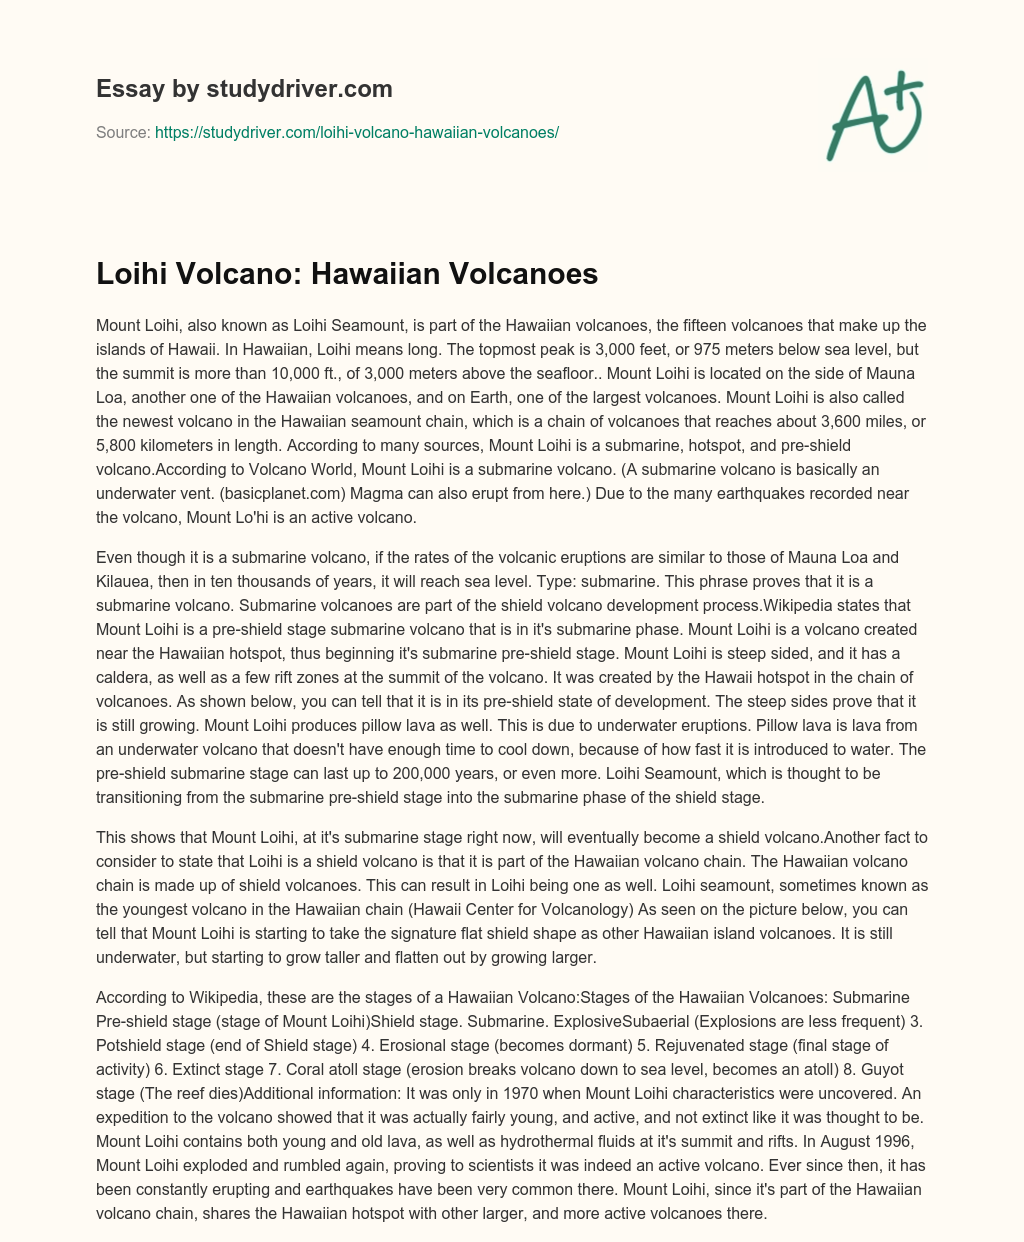 Loihi Volcano: Hawaiian Volcanoes essay